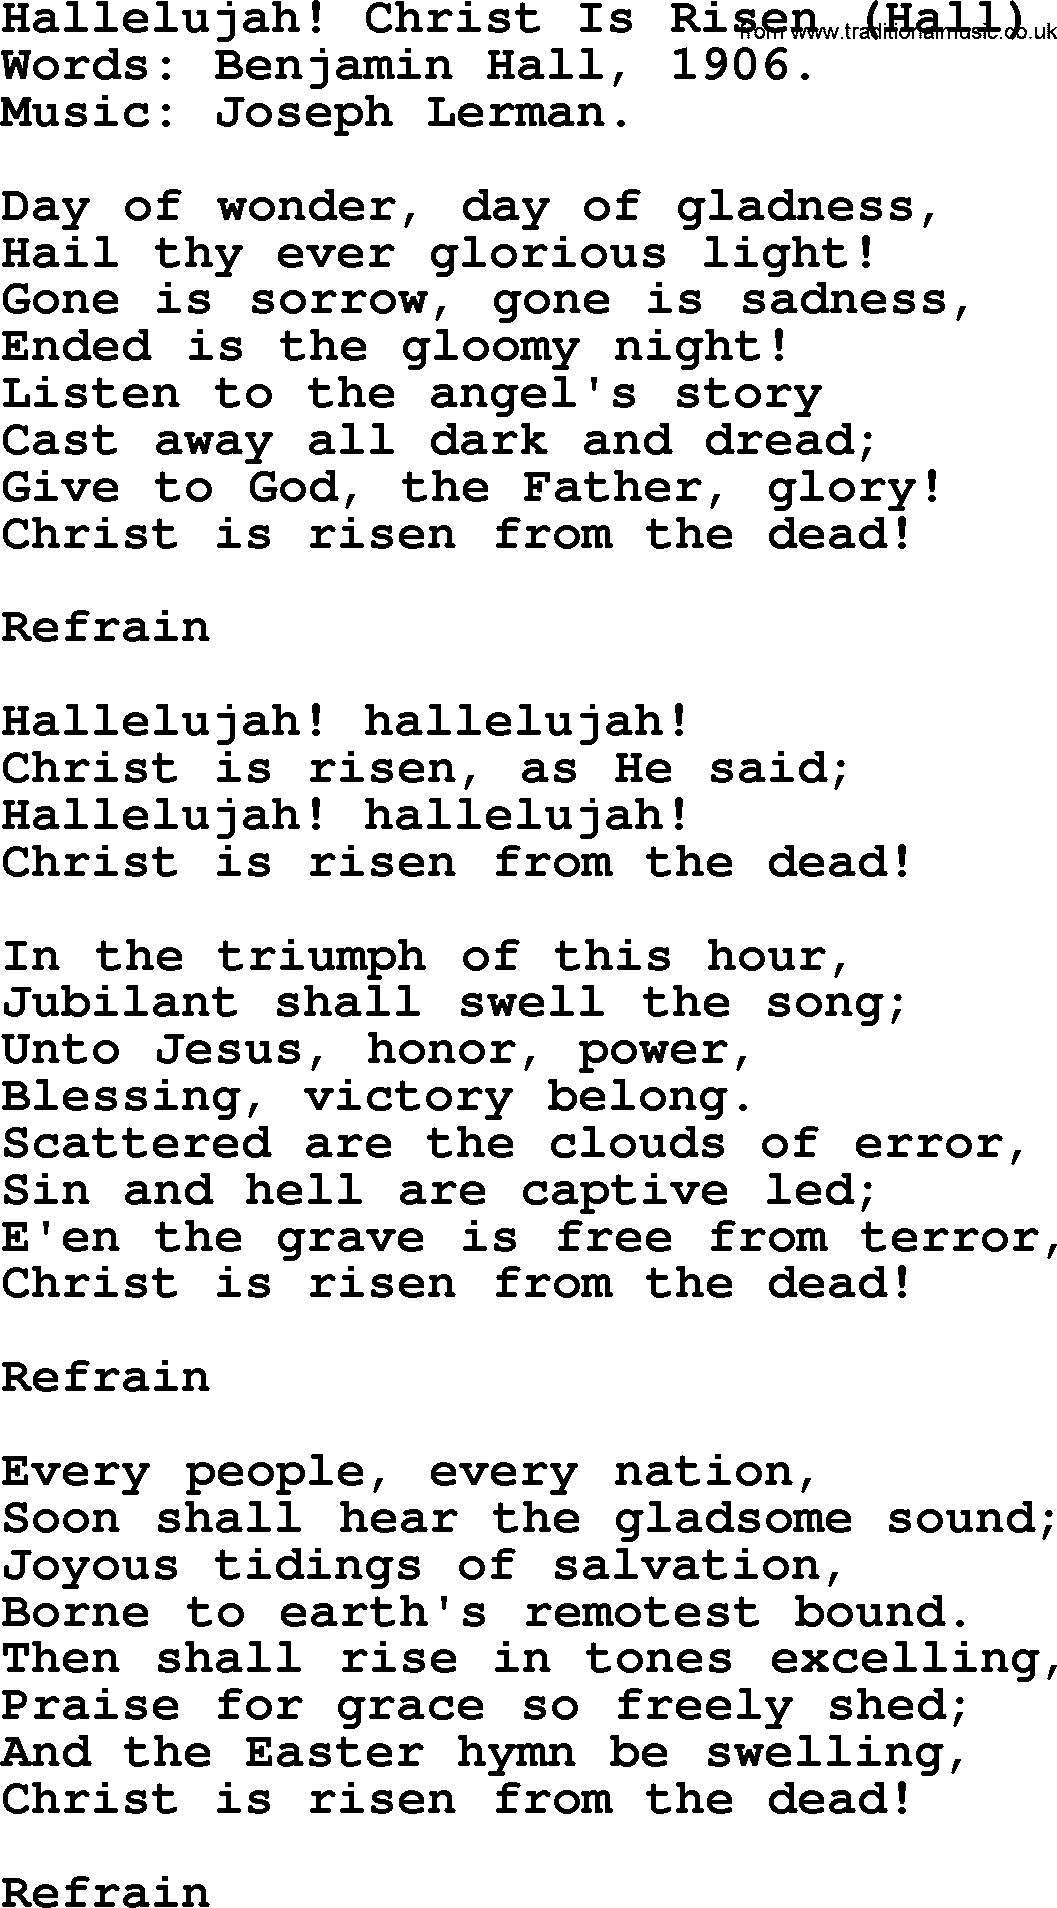 Easter Hymns, Song Hallelujah! Christ Is Risen (hall) lyrics, midi